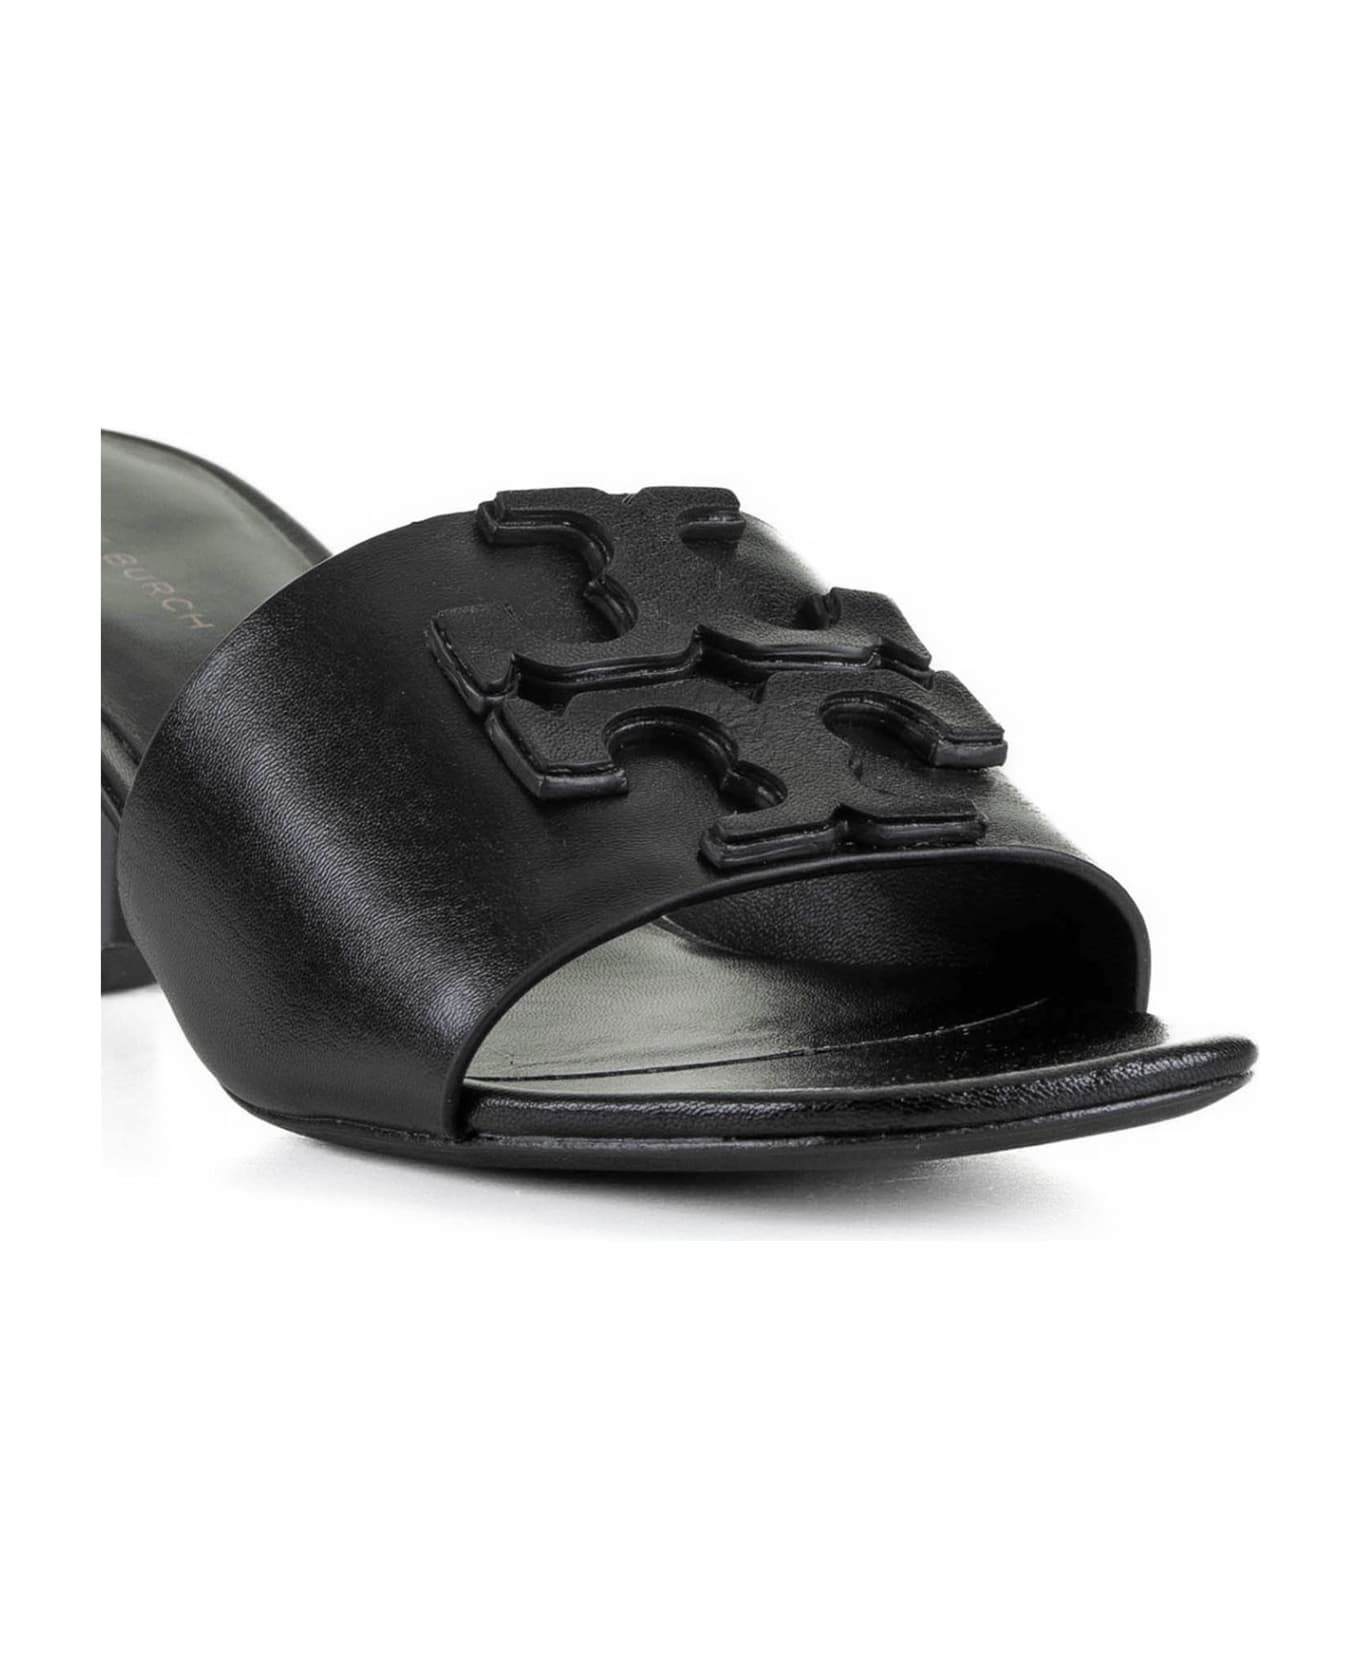 Tory Burch Flat Shoes - PERFECT BLACK